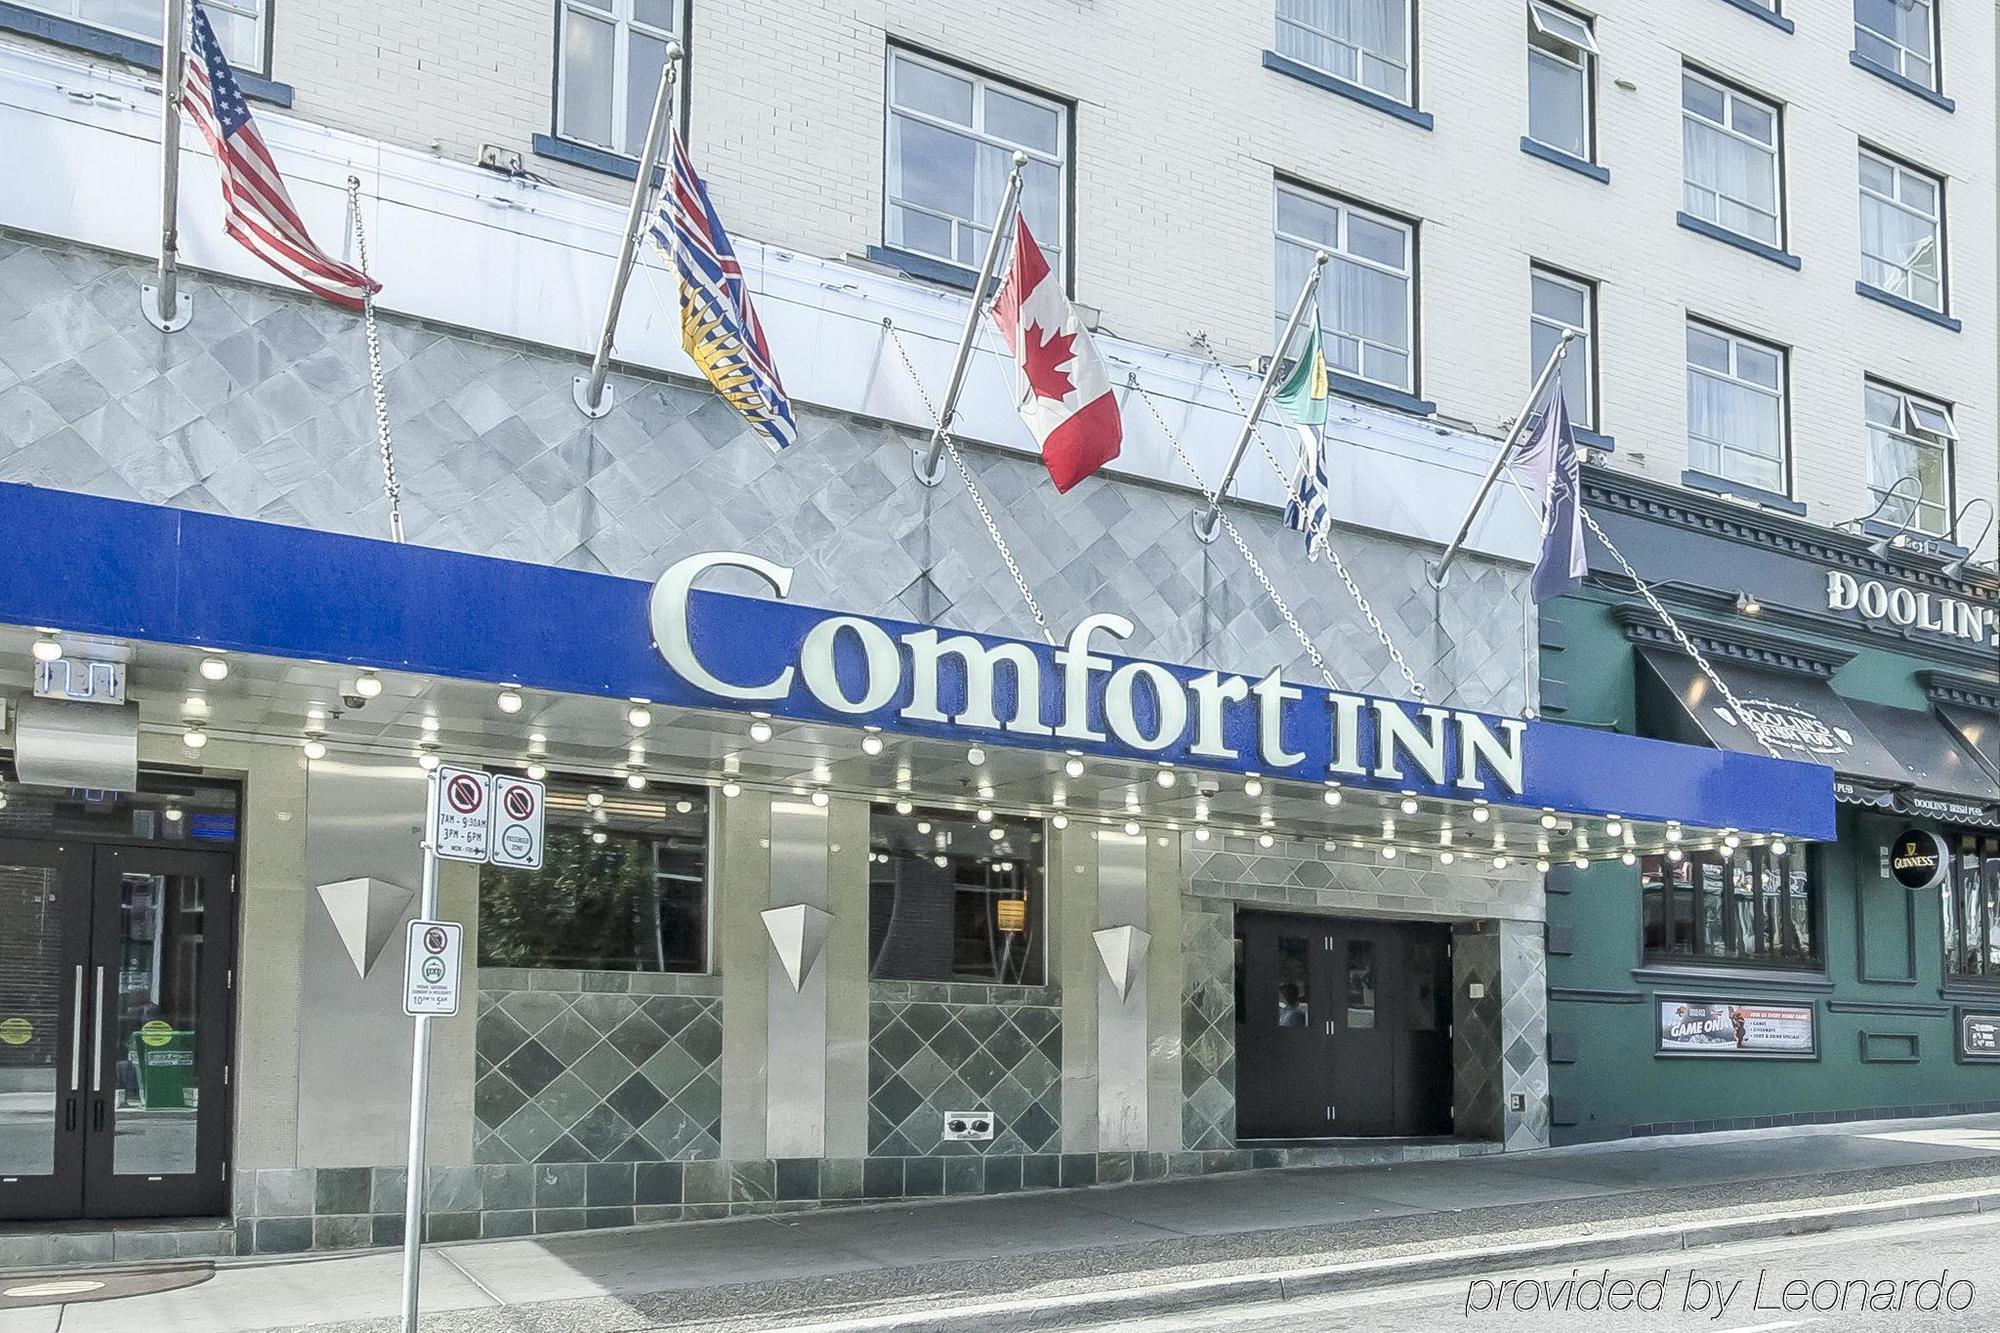 Hotel Belmont Vancouver Mgallery Экстерьер фото